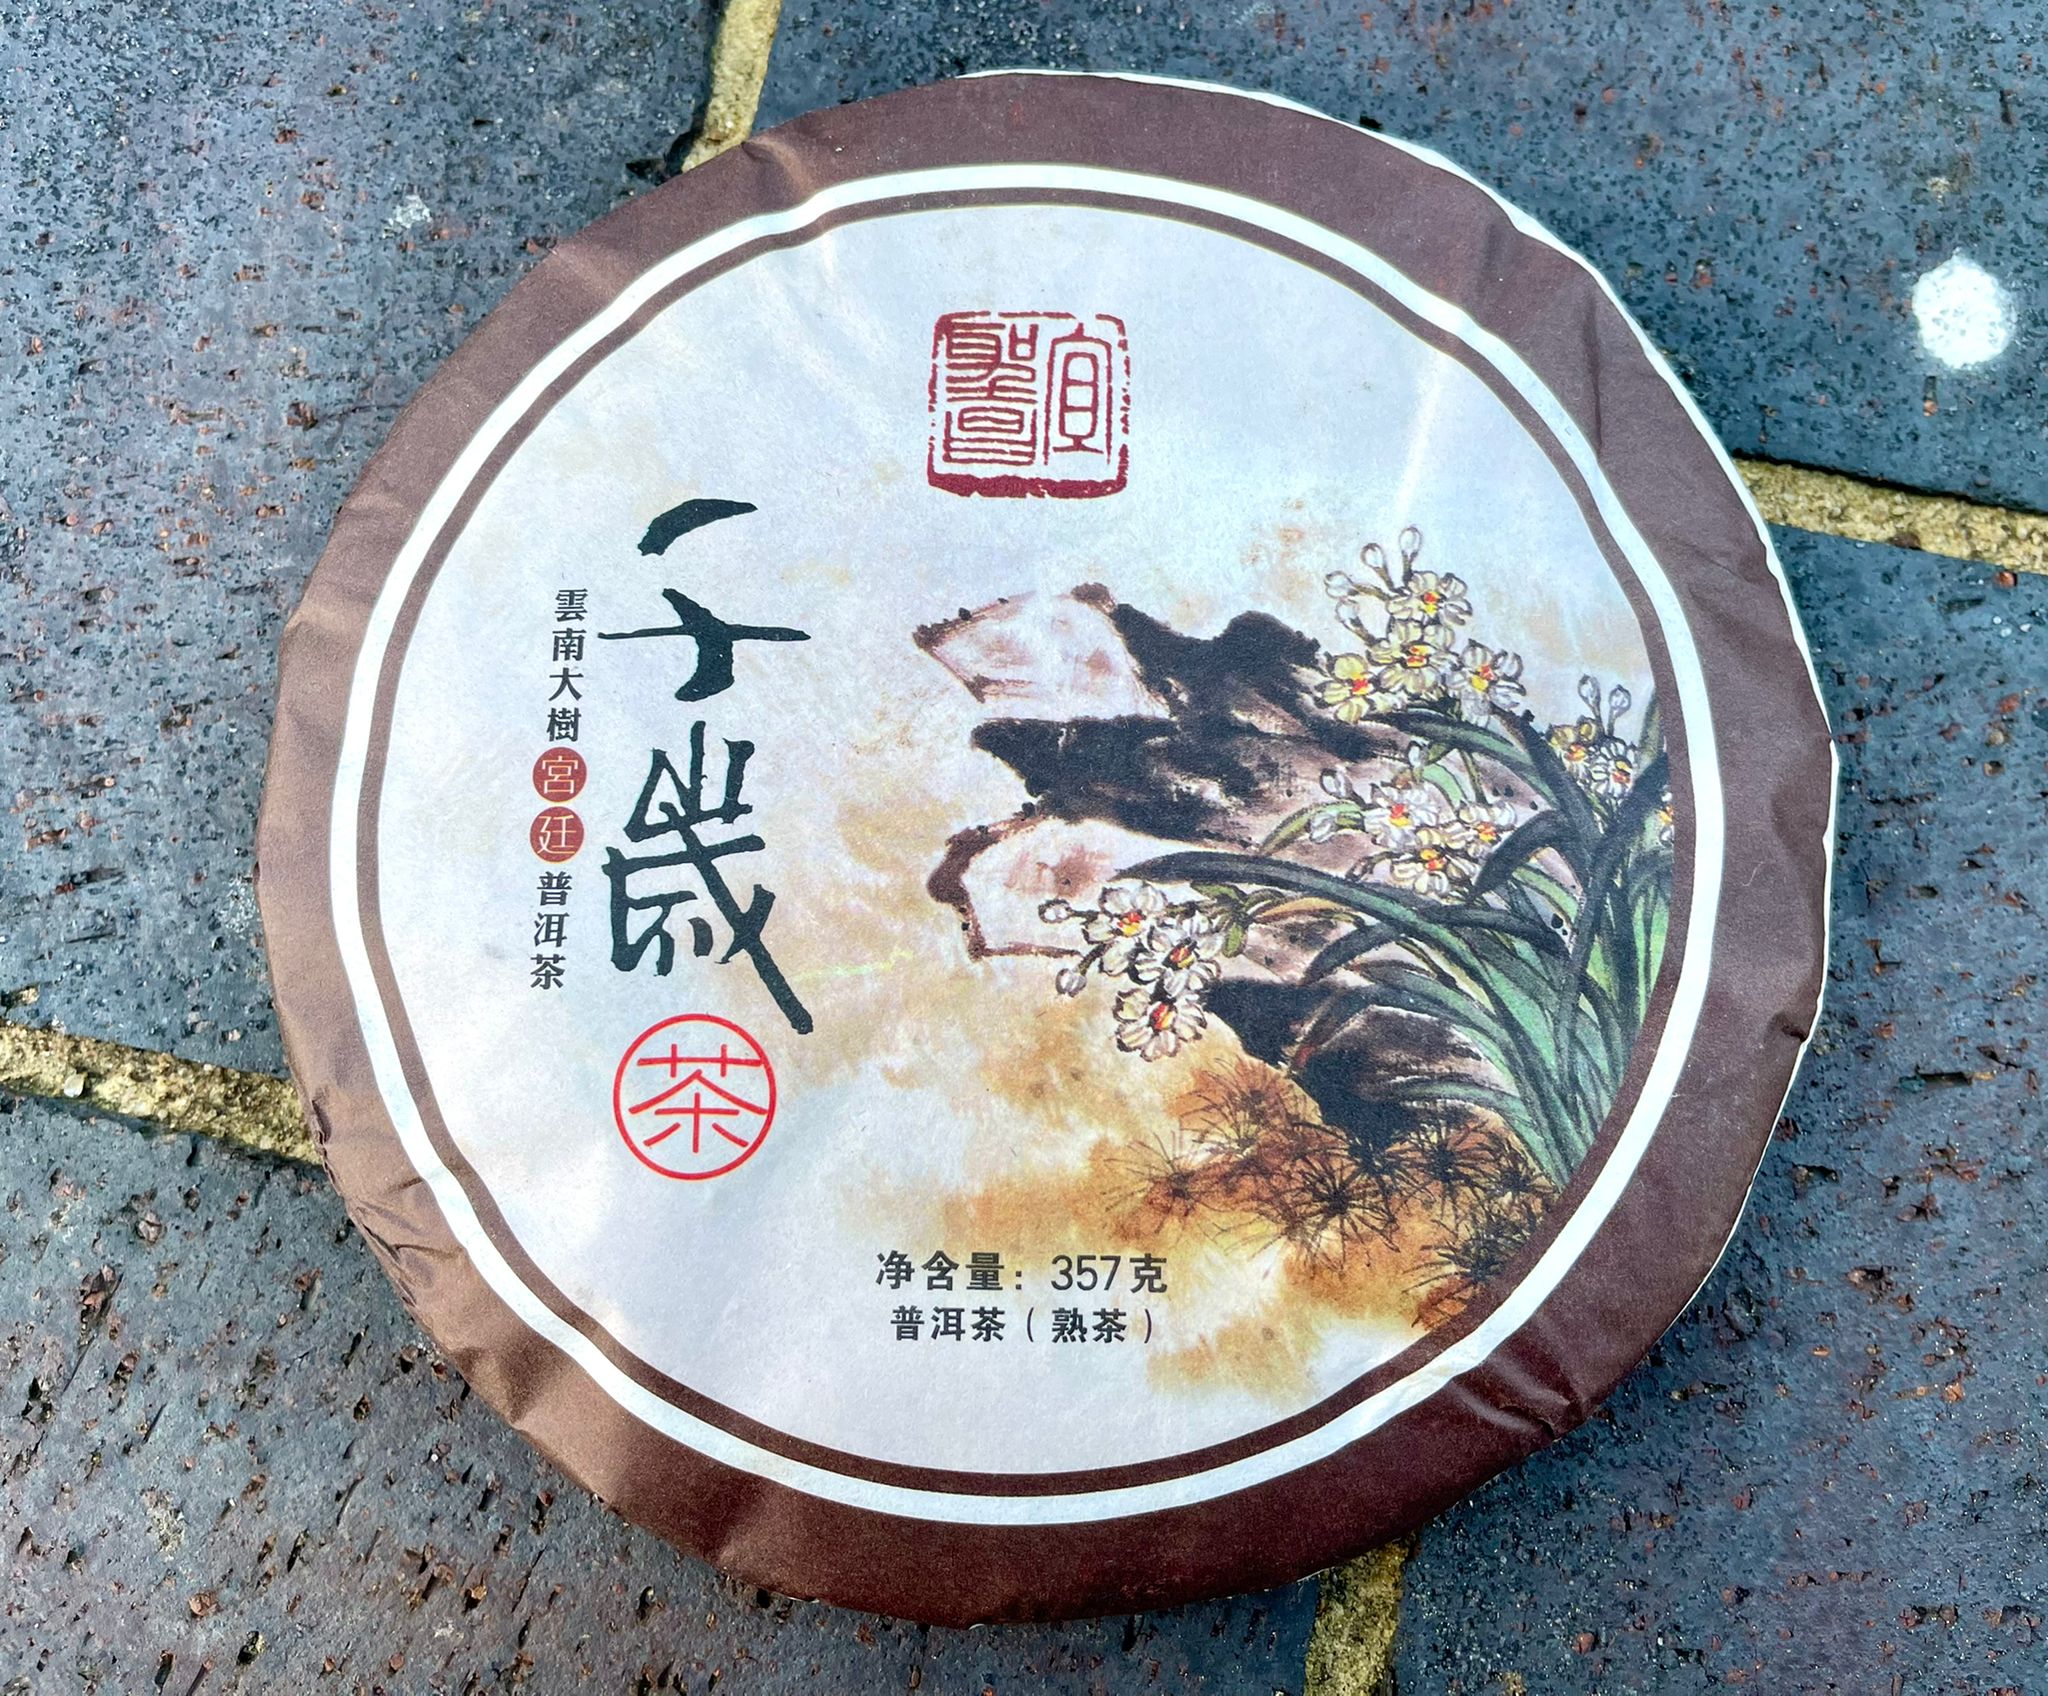 2012 ‘Qiansui’ Menghai Old Tree Ripe Puerh Tea Cake